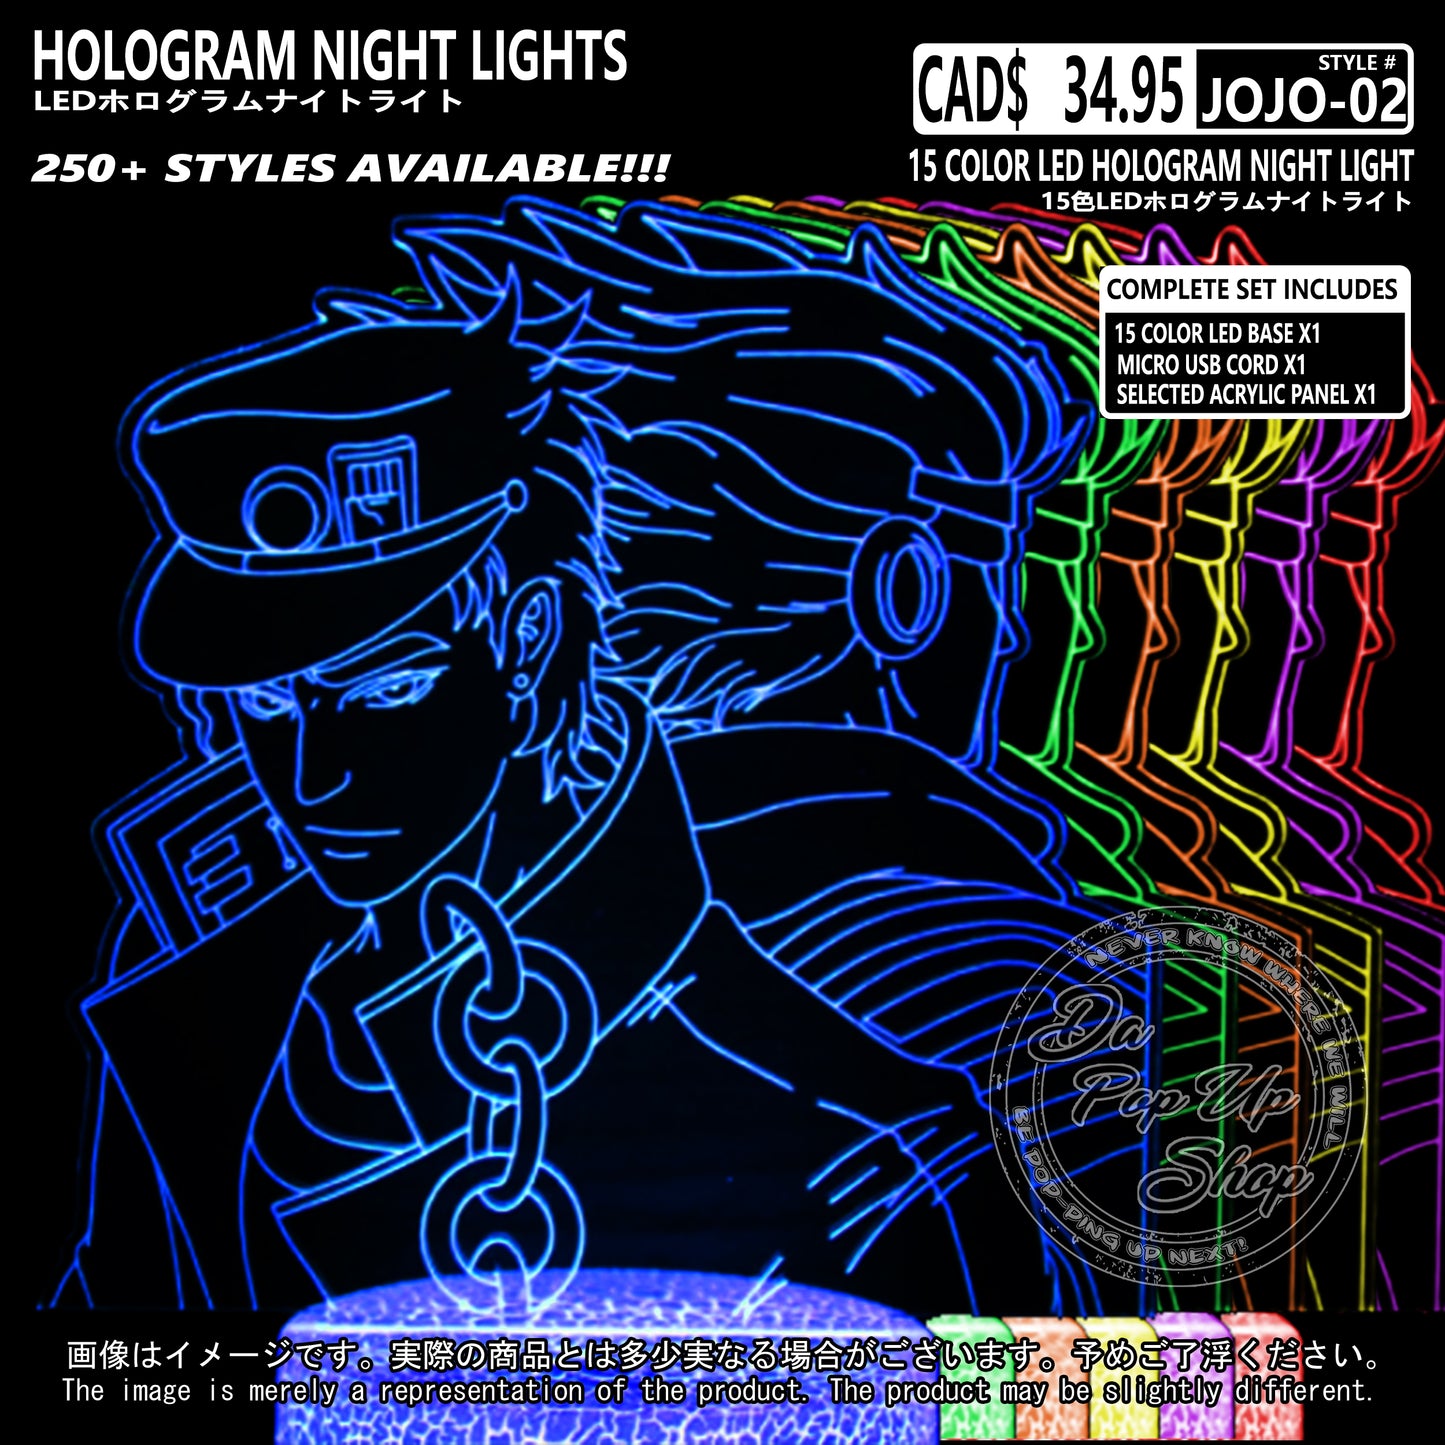 (JOJO-02) JoJo's Bizarre Adventure Hologram LED Night Light